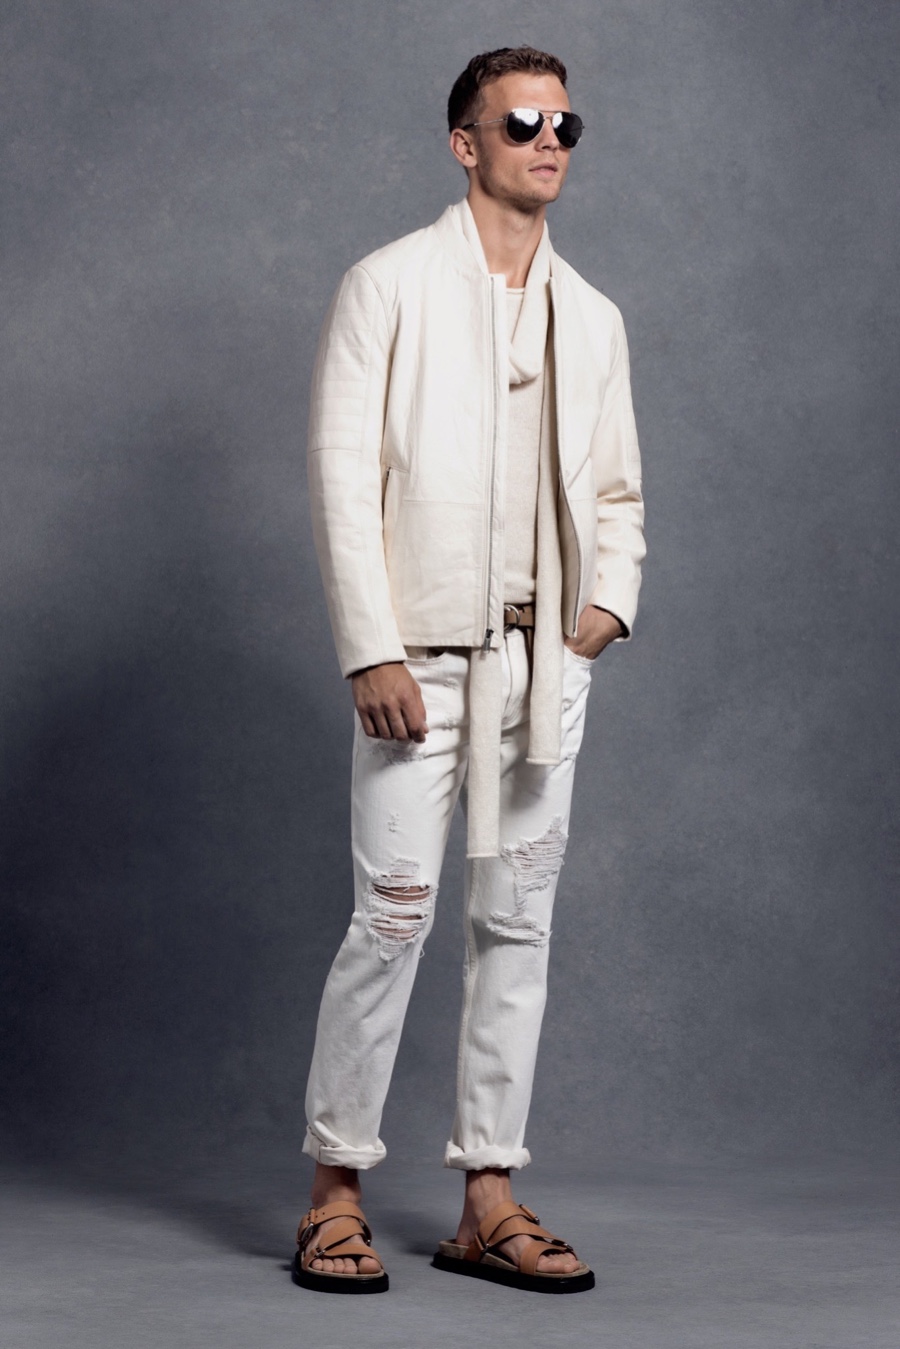 Michael Kors Spring/Summer 2016 Collection | New York Fashion Week: Men